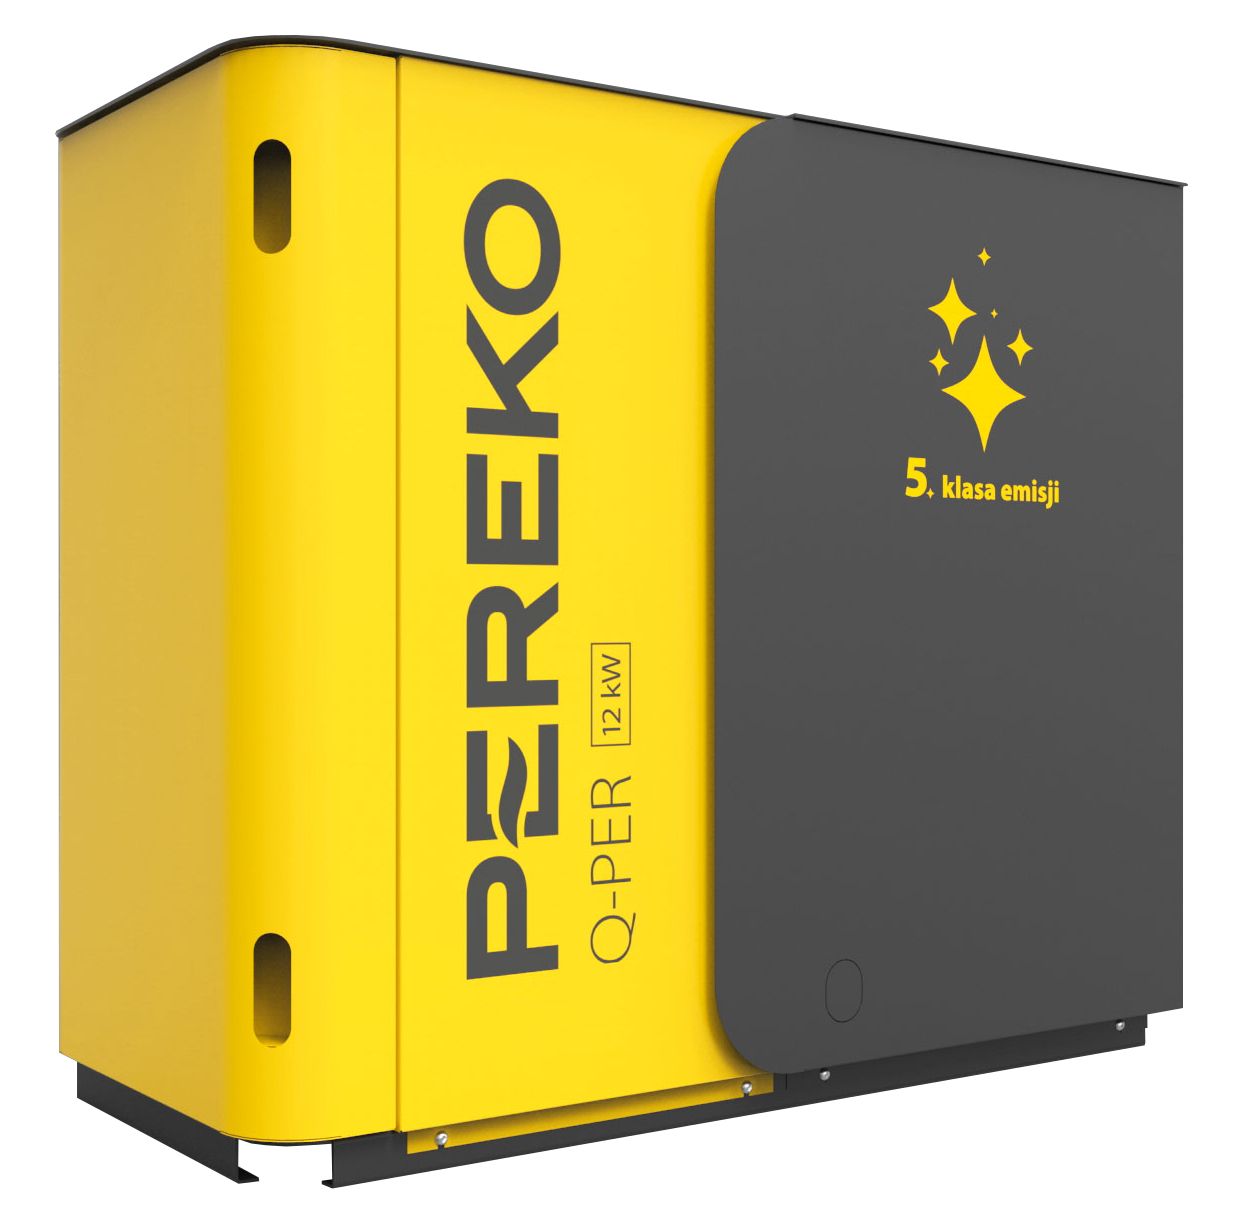 PerEko Q-PER 8 kW